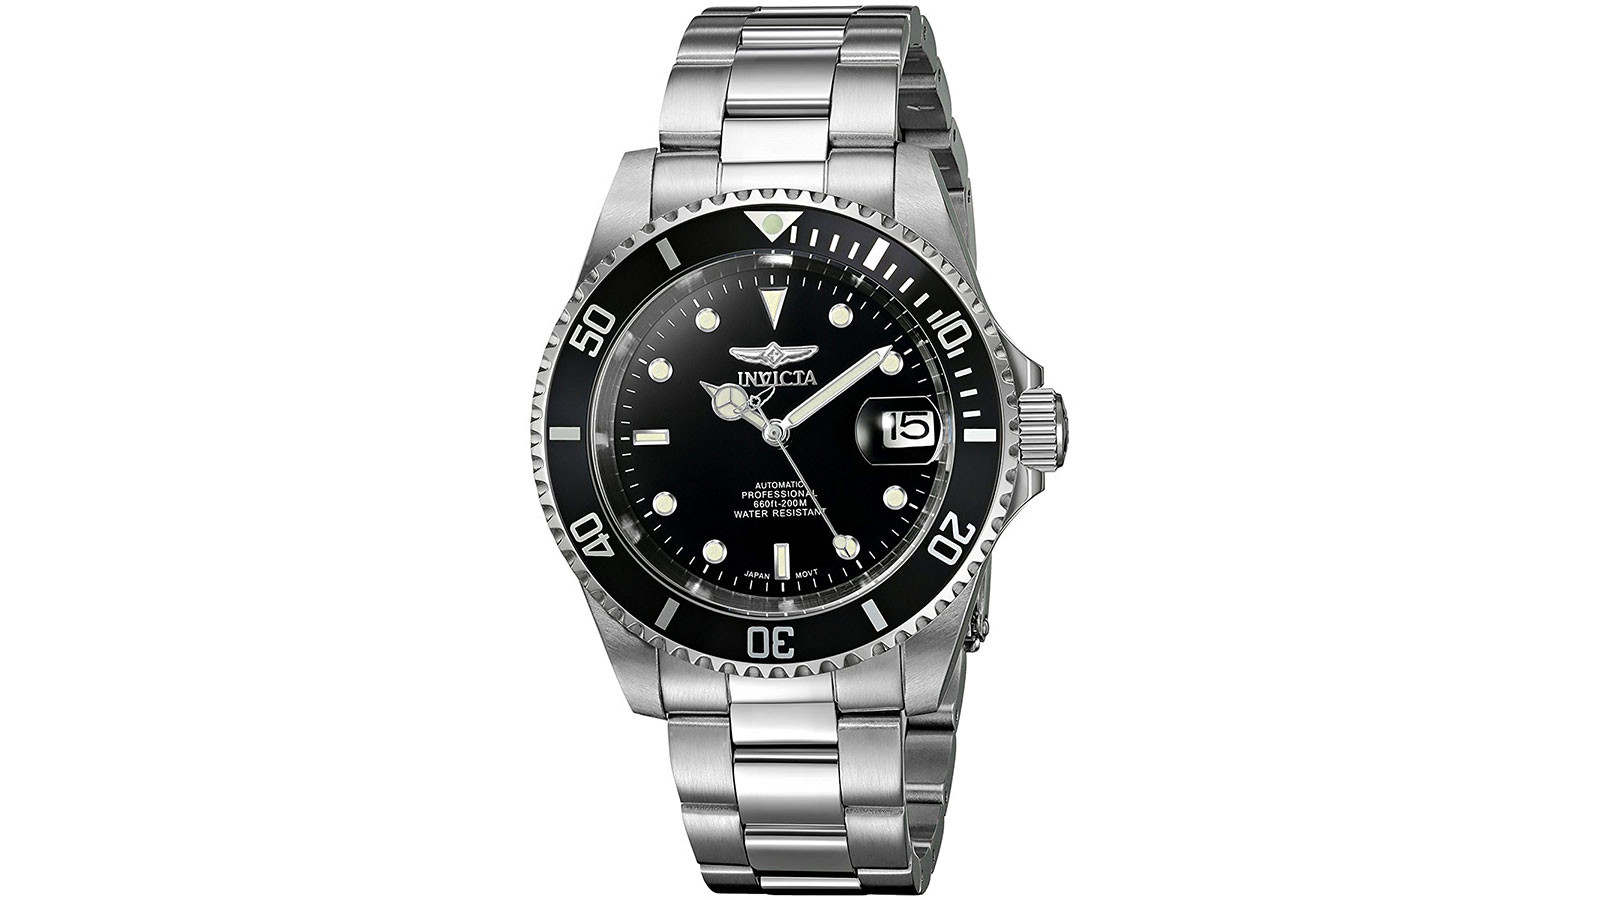 Invicta Men's 8926OB Pro Diver Watch | best men's watches under $100